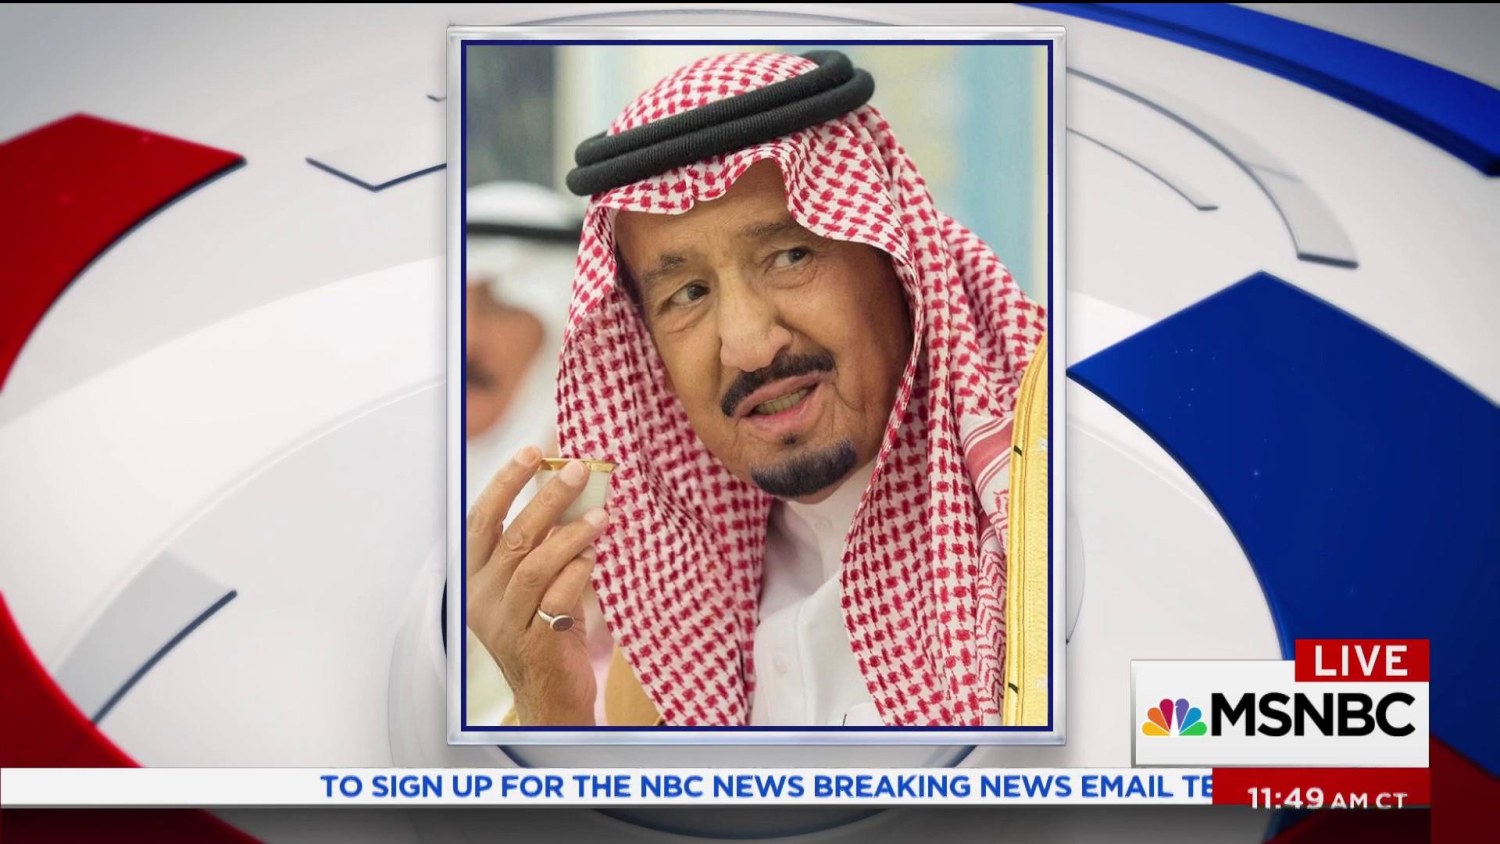 Saudi Arabia And Qatar Near Deal To Help End Gulf Crisis Sources Say